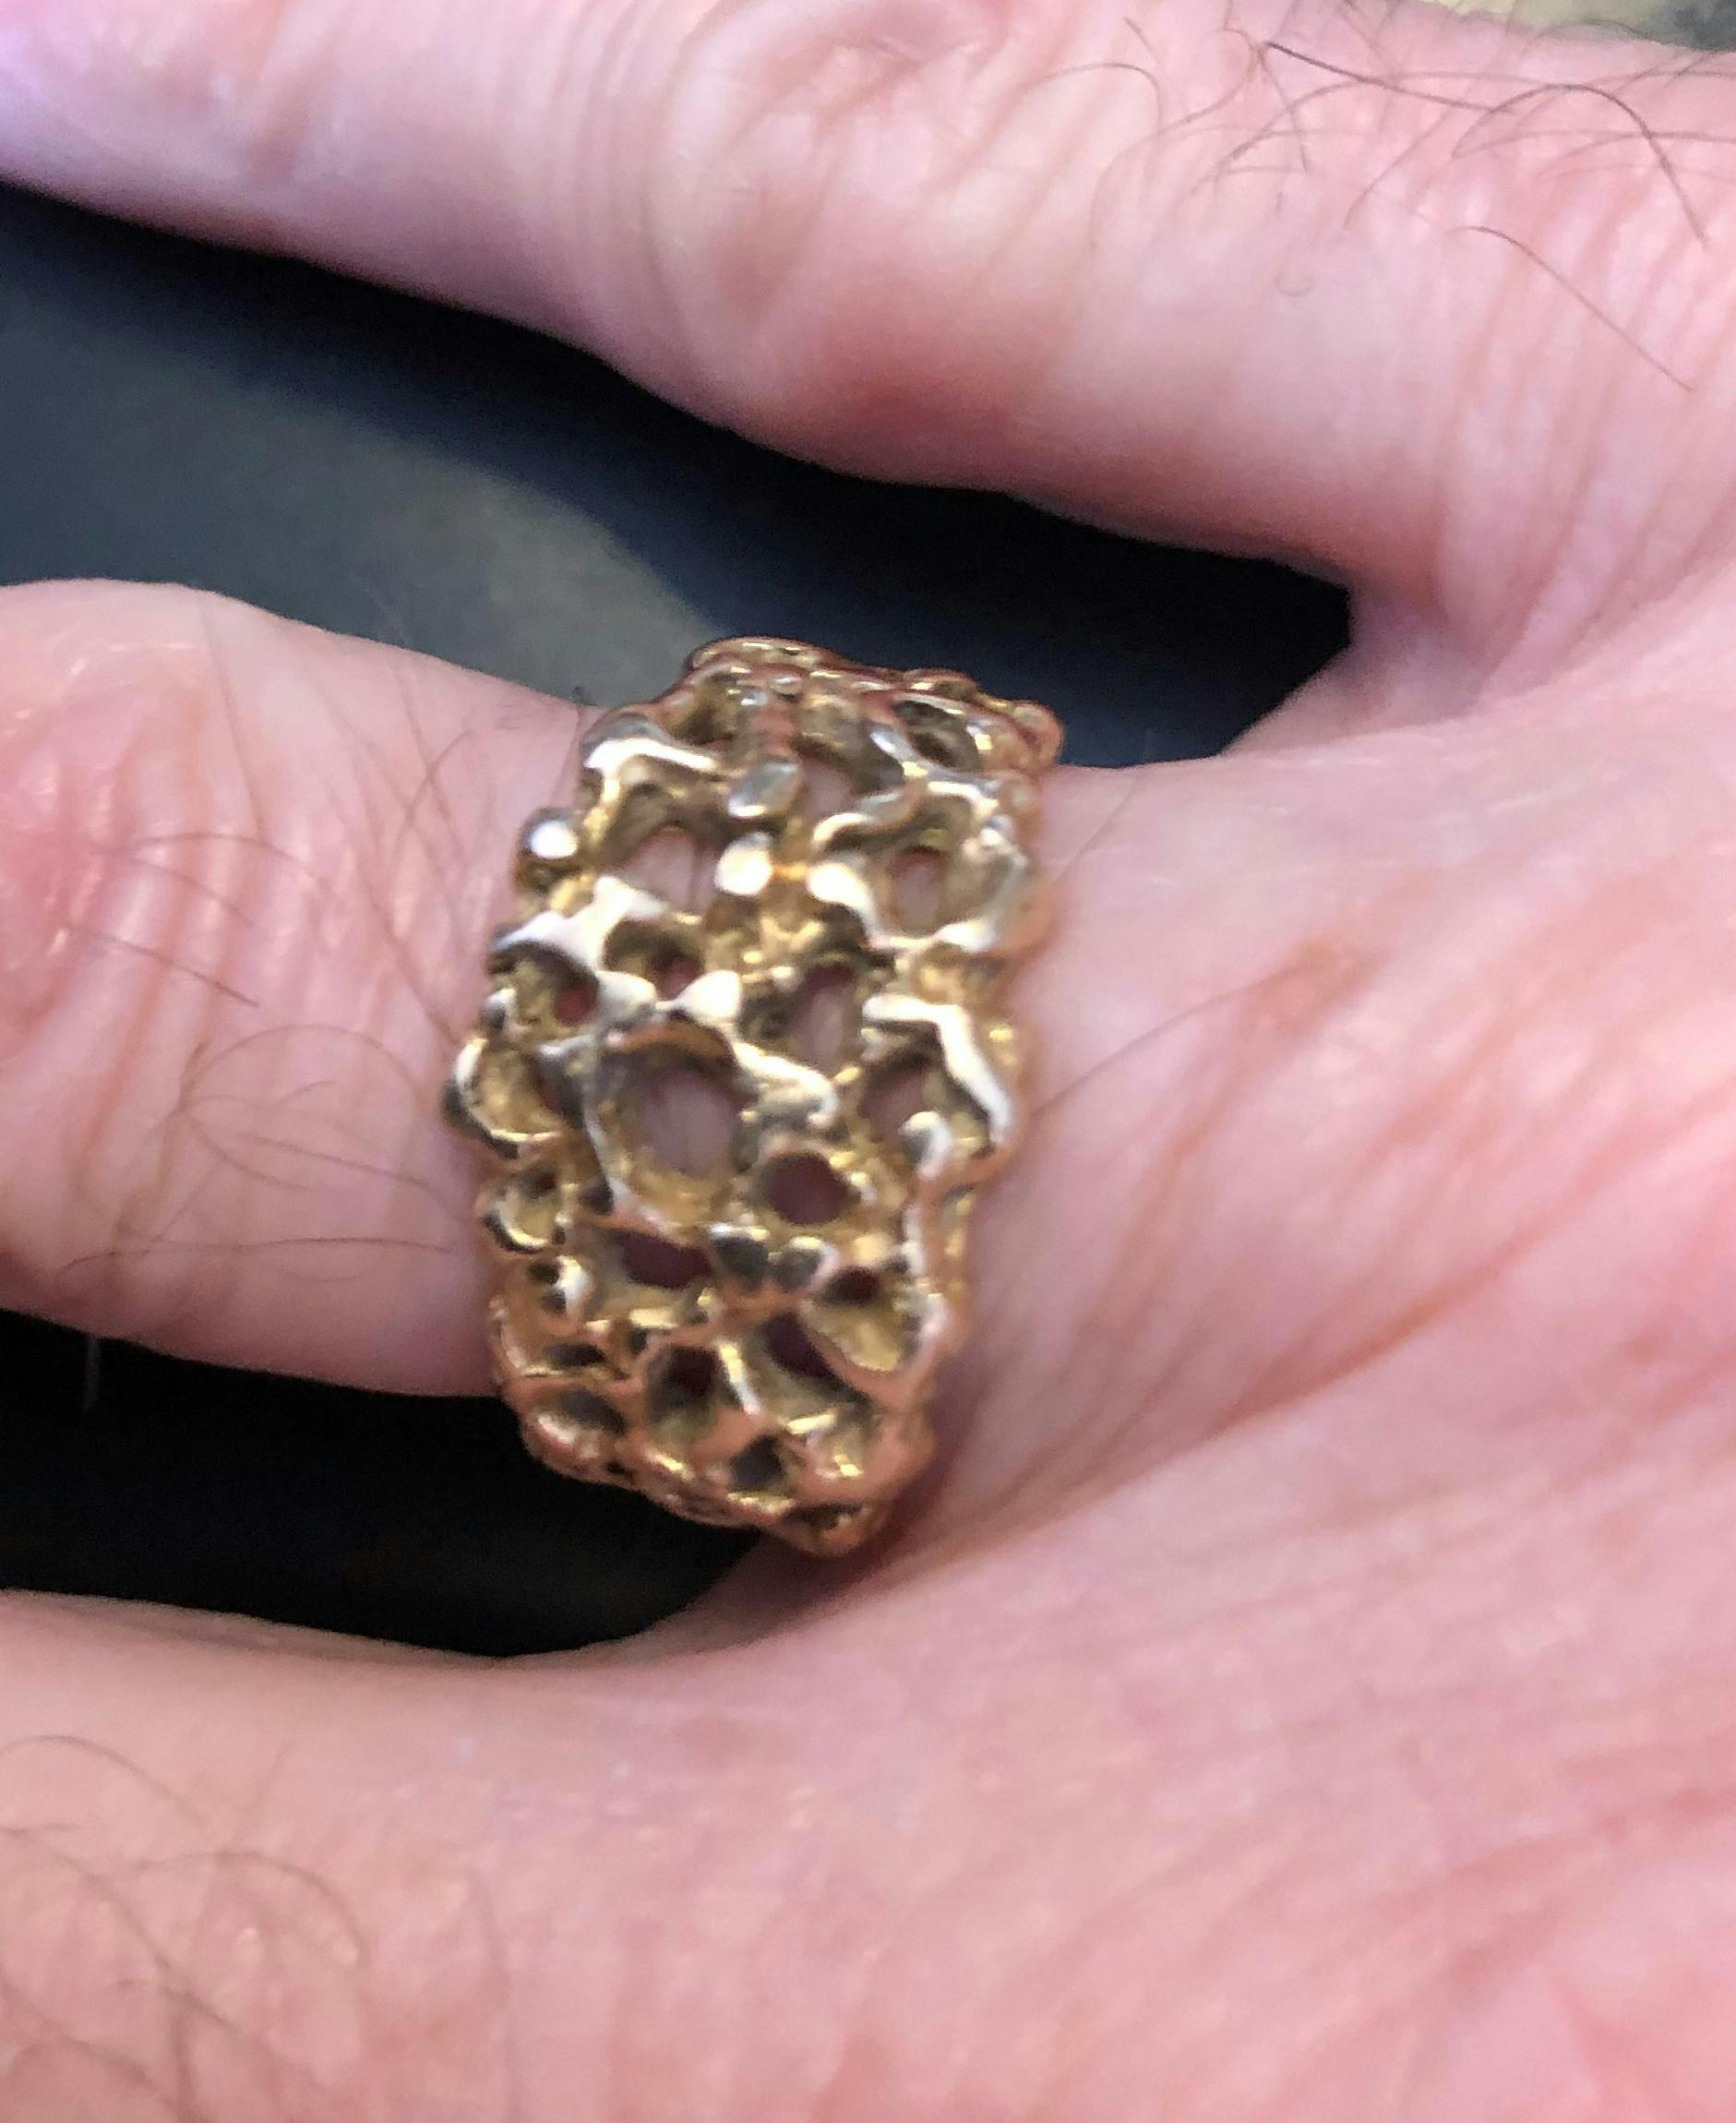 A golden ring on a finger